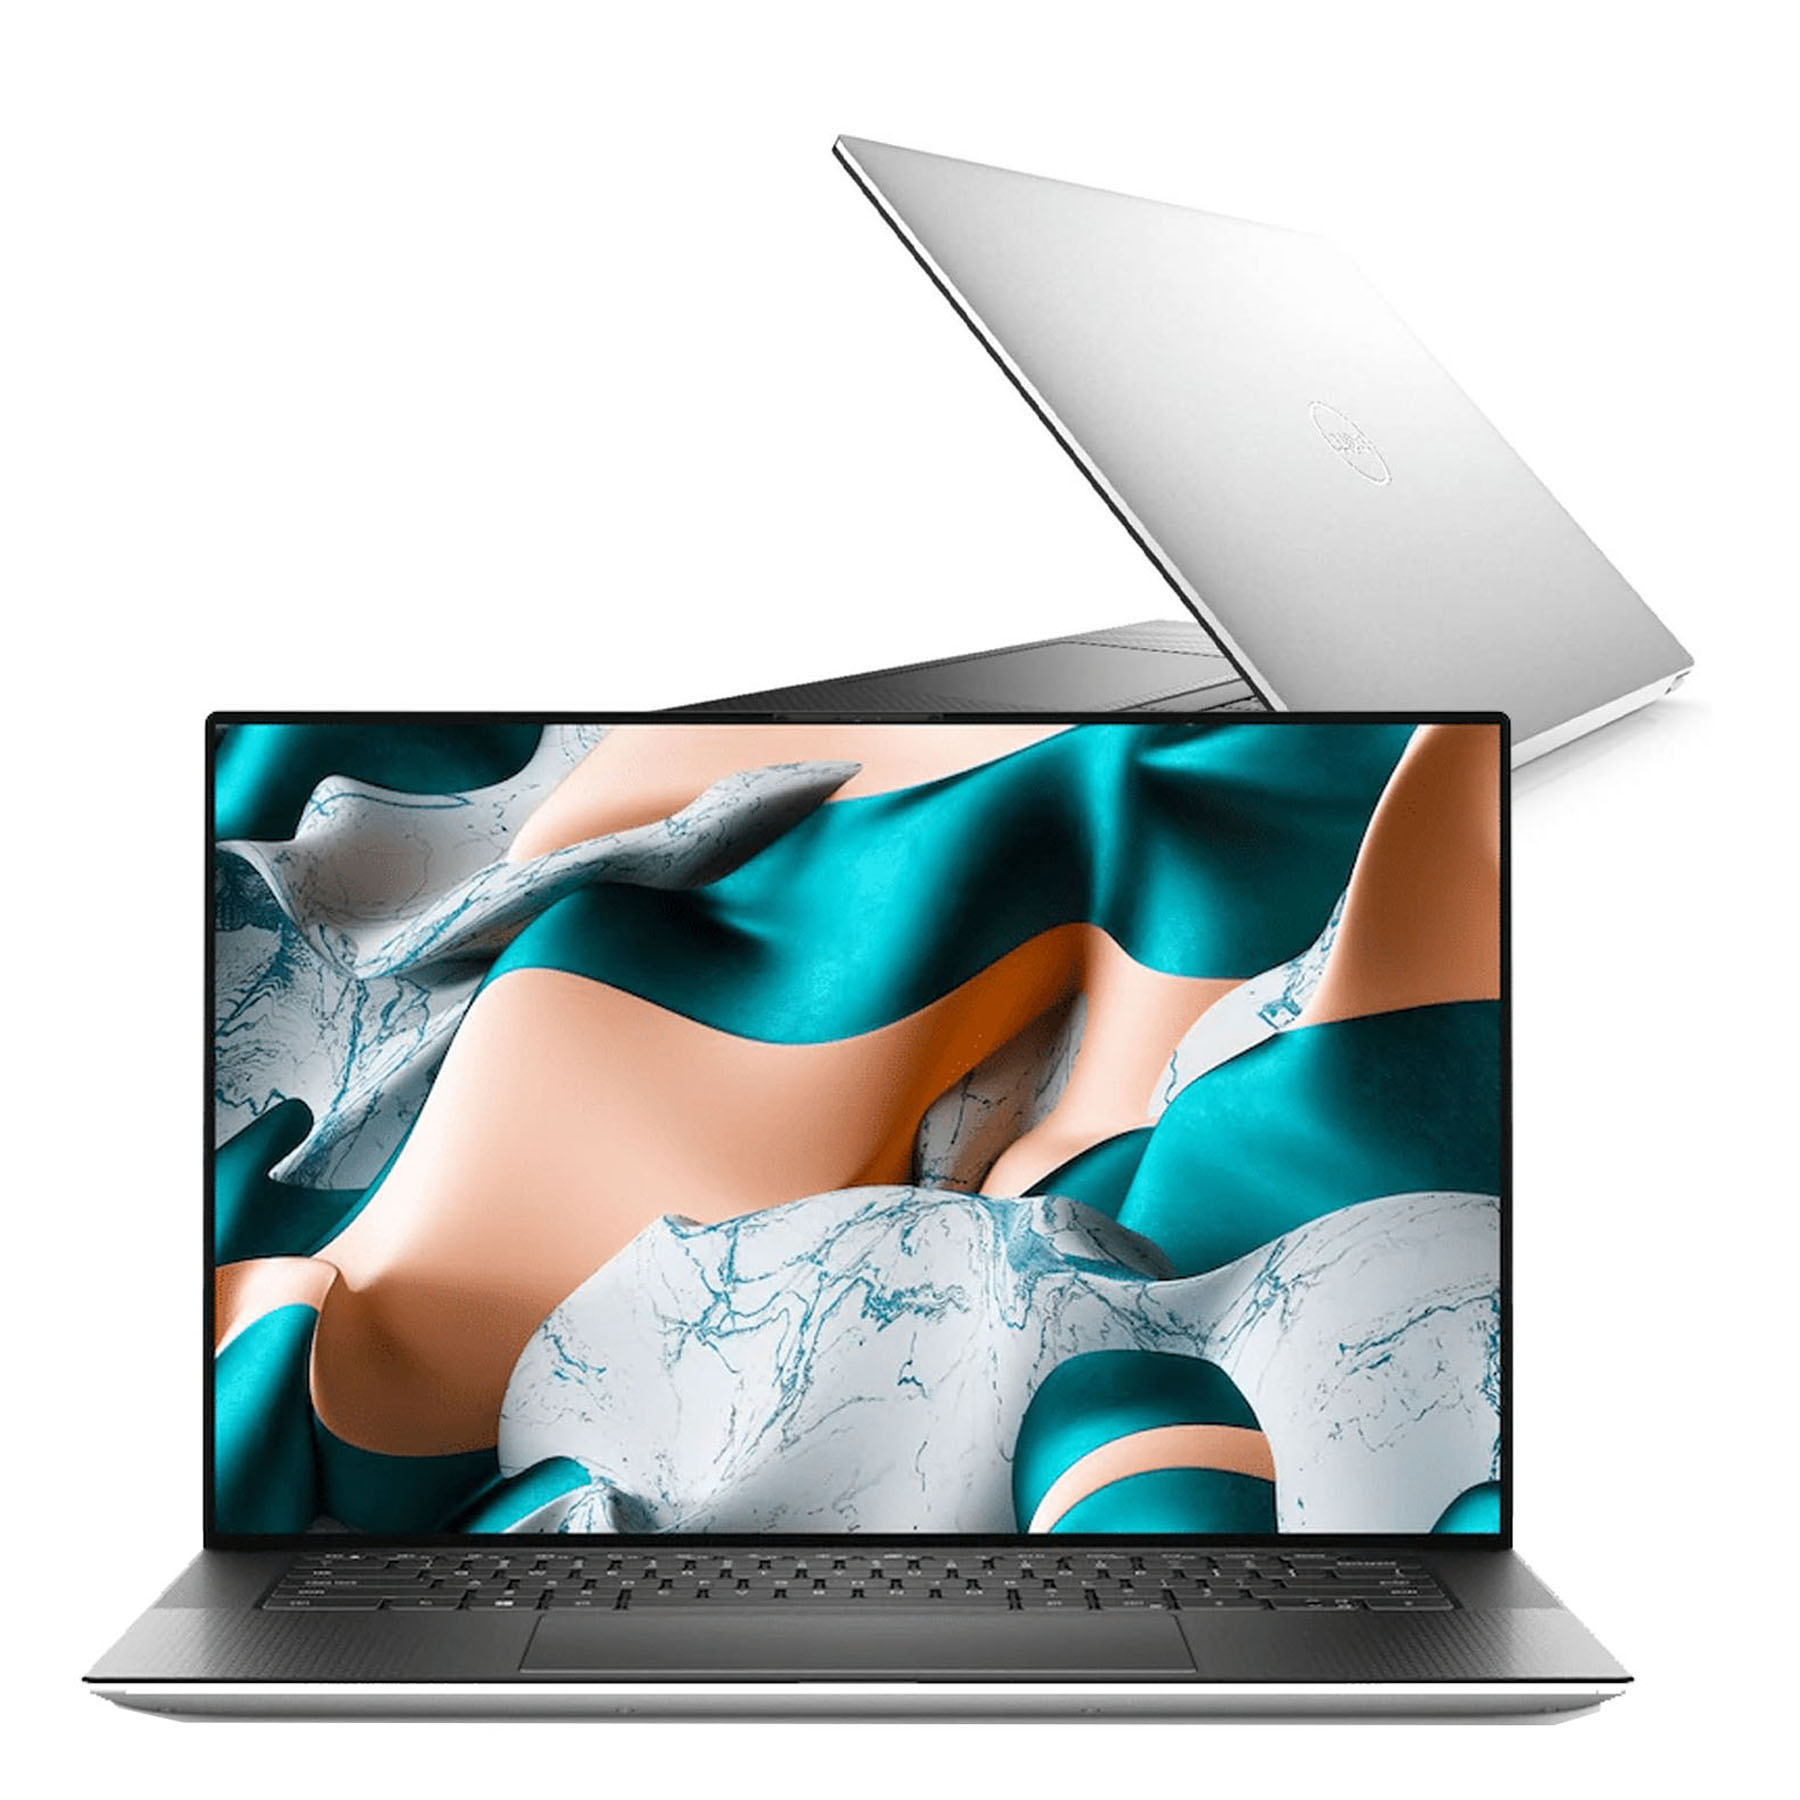 Laptop Dell XPS 9500 2020 (Core i7-10750H, 16GB, 512GB, VGA NVIDIA GTX 1650Ti, 15.6 inch FHD IPS)